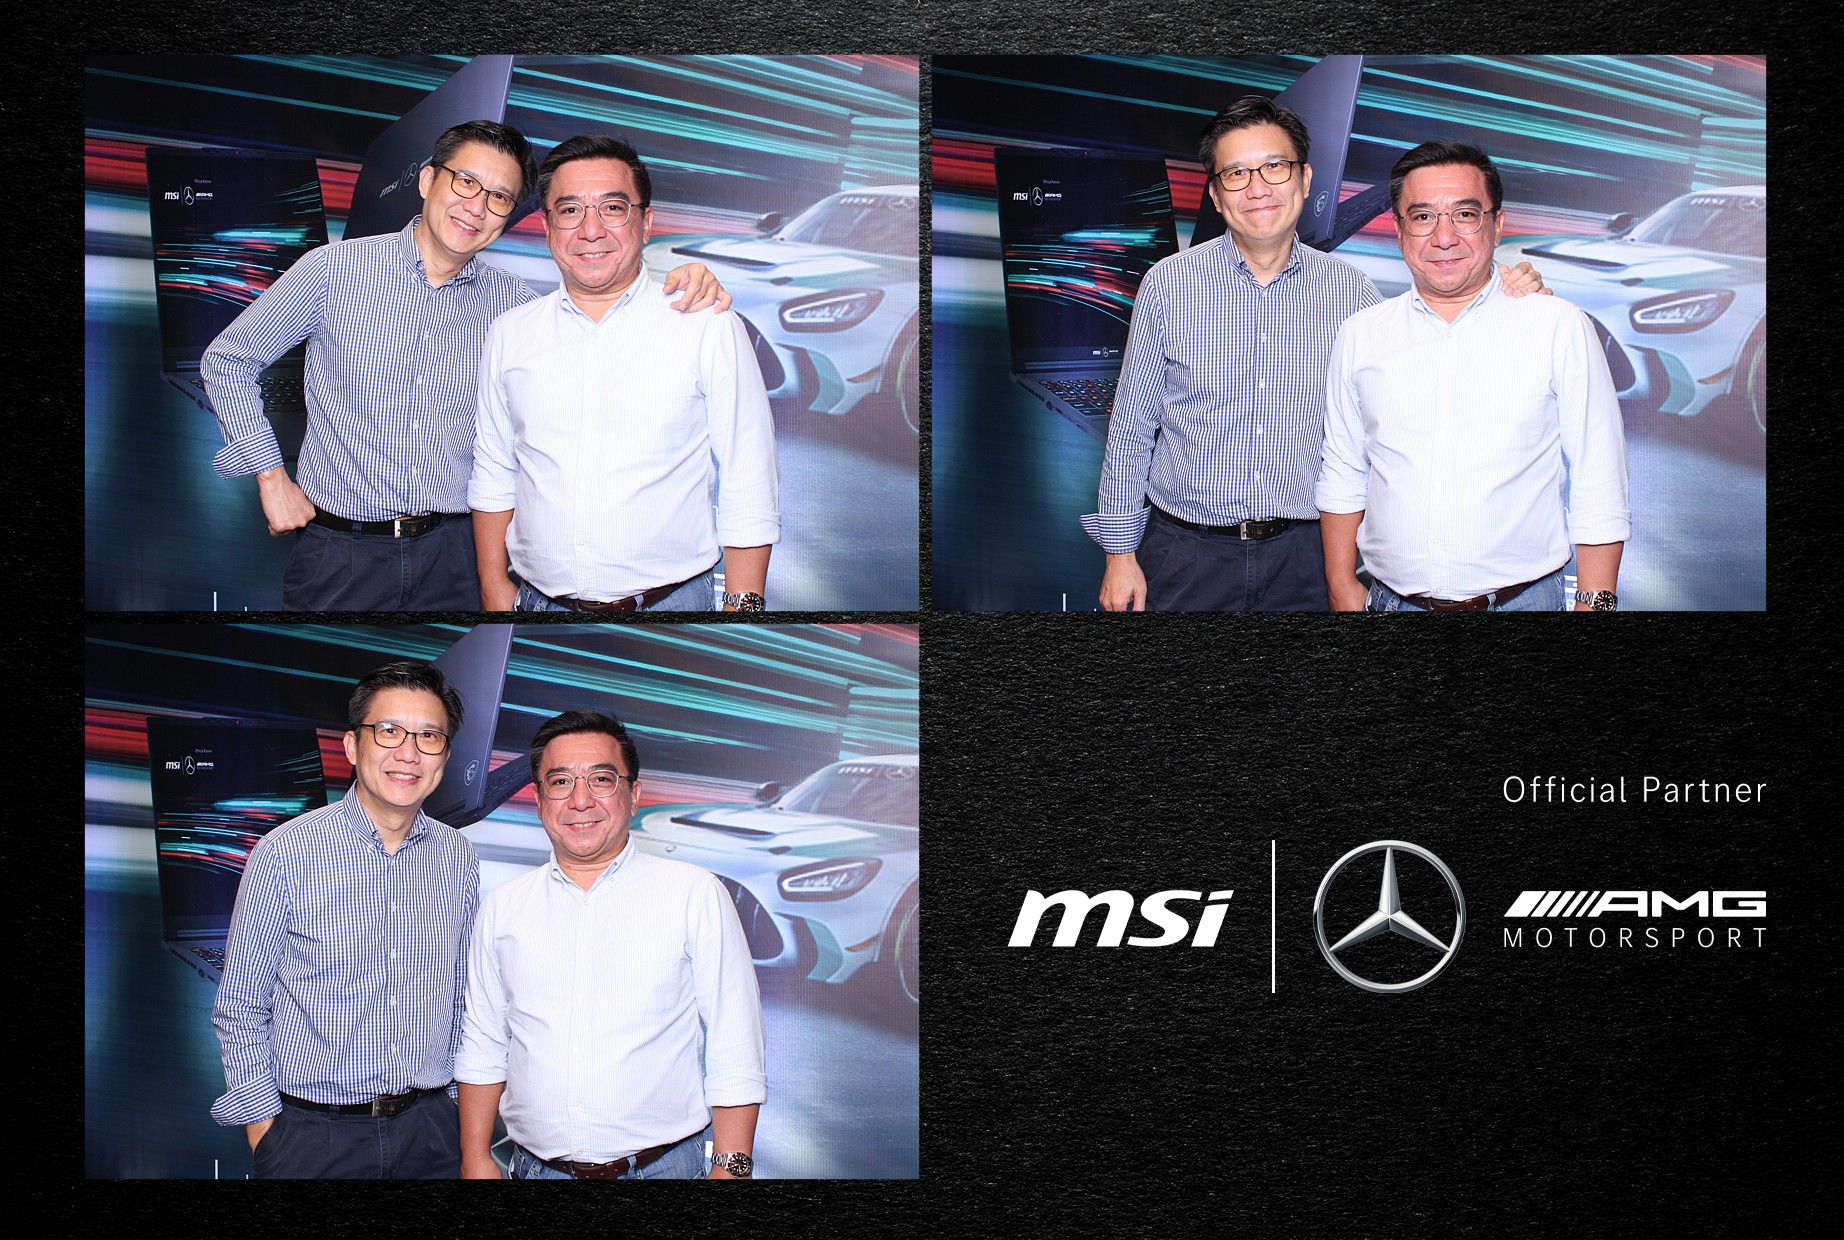 MSI X AMG Motorsport